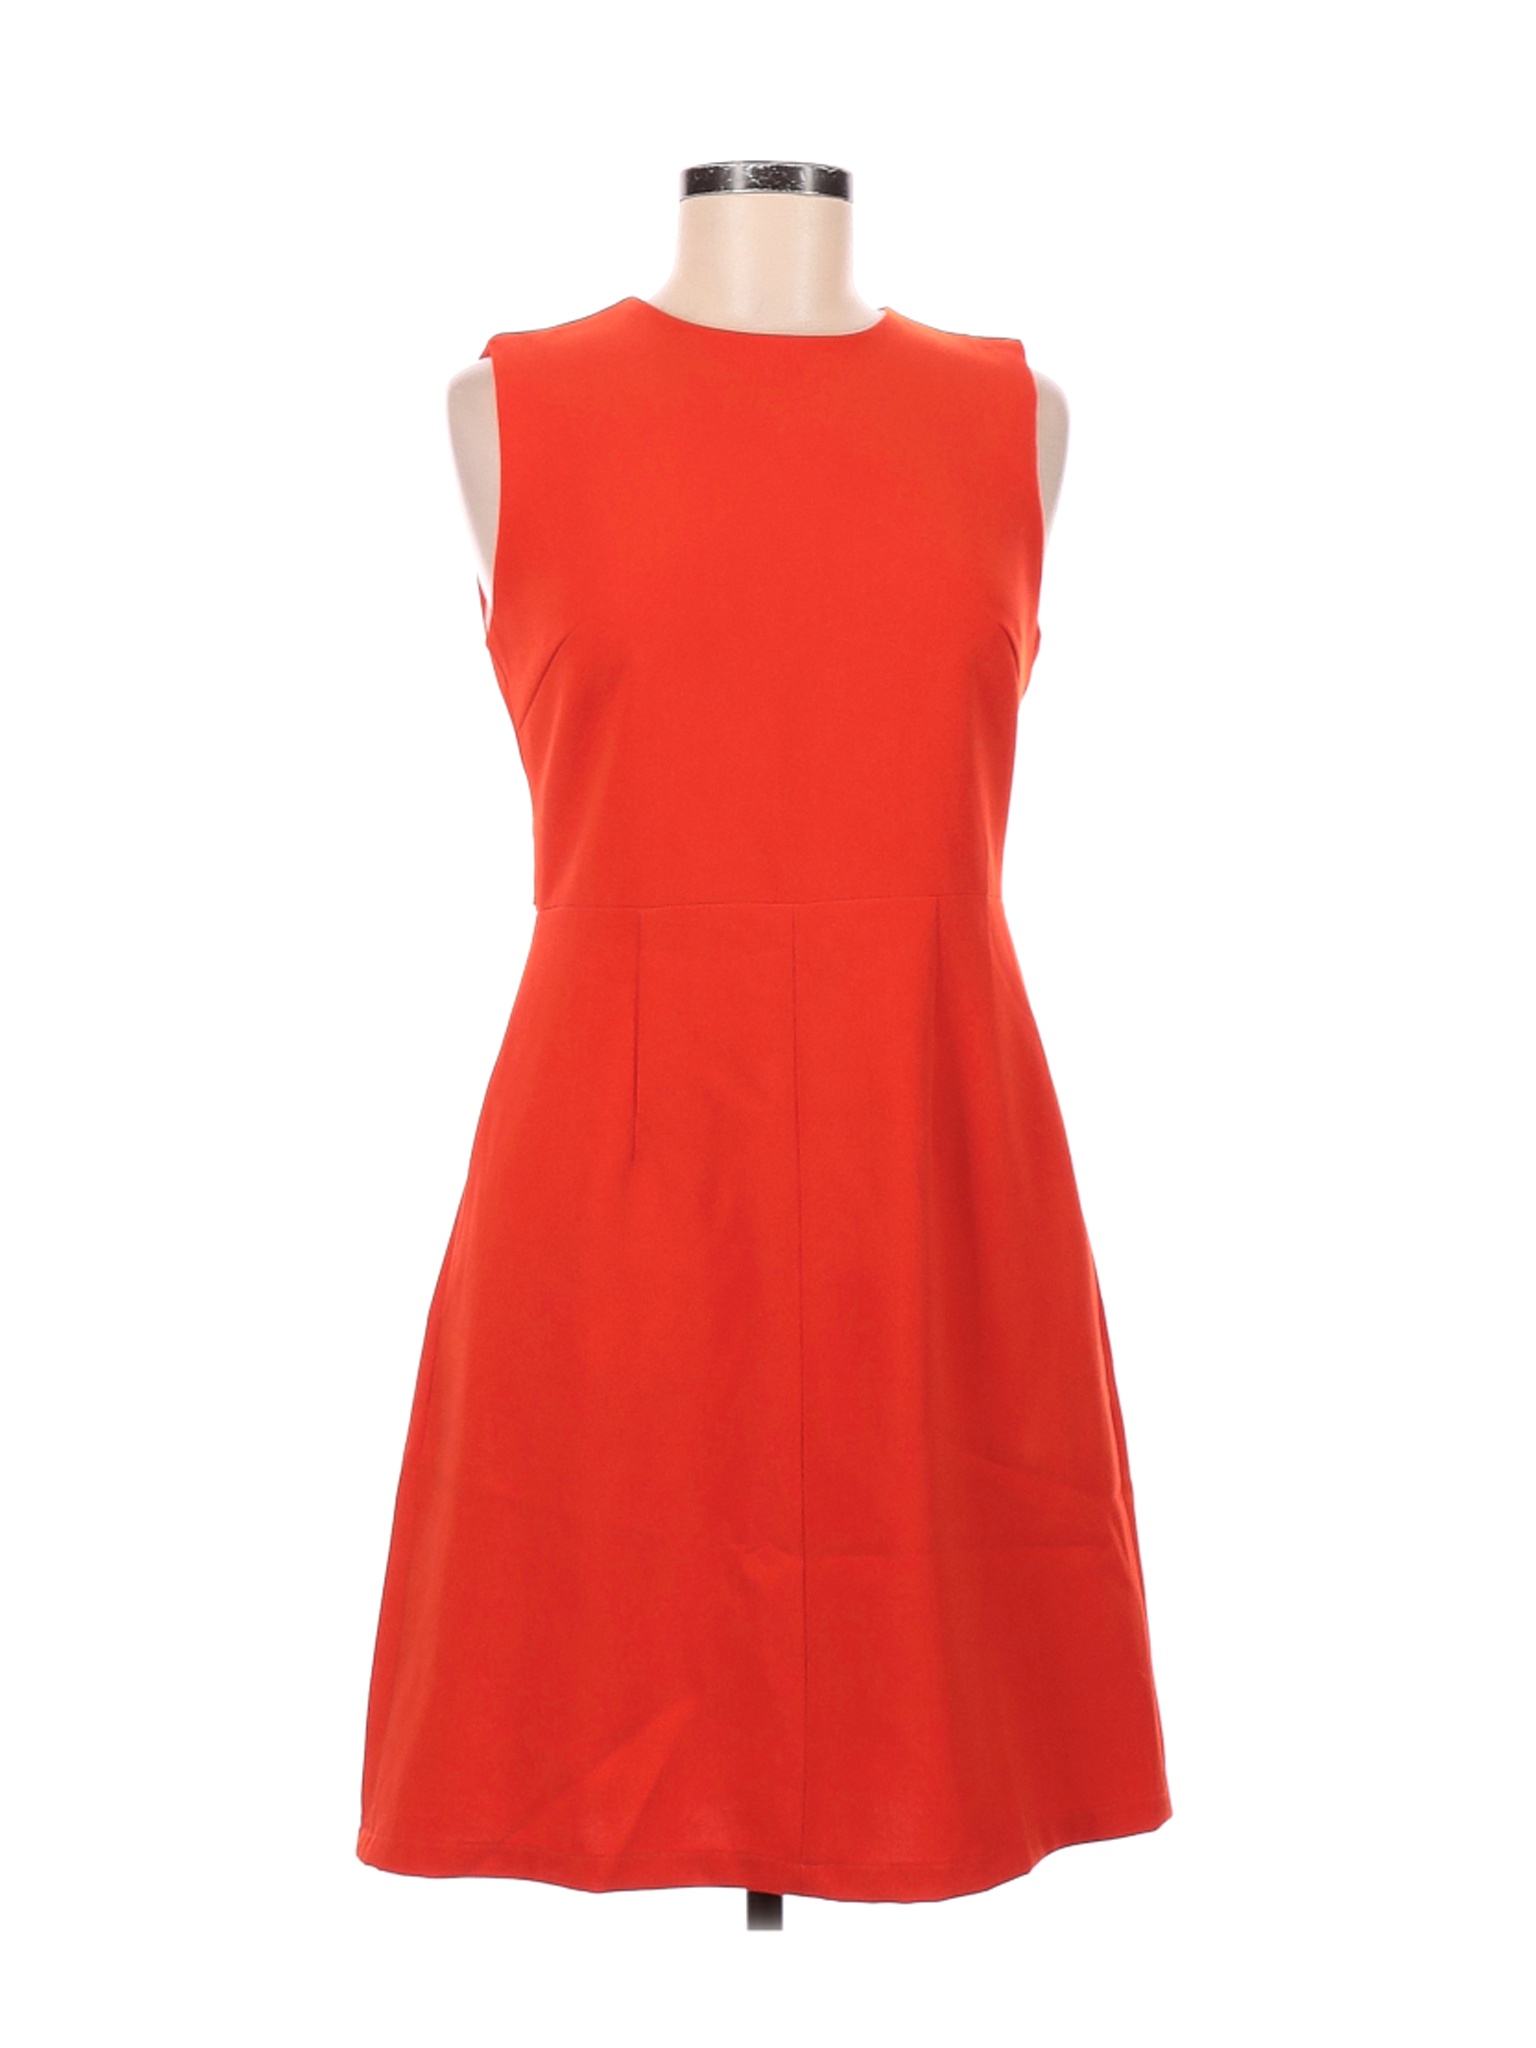 Cremieux Women Orange Casual Dress M | eBay